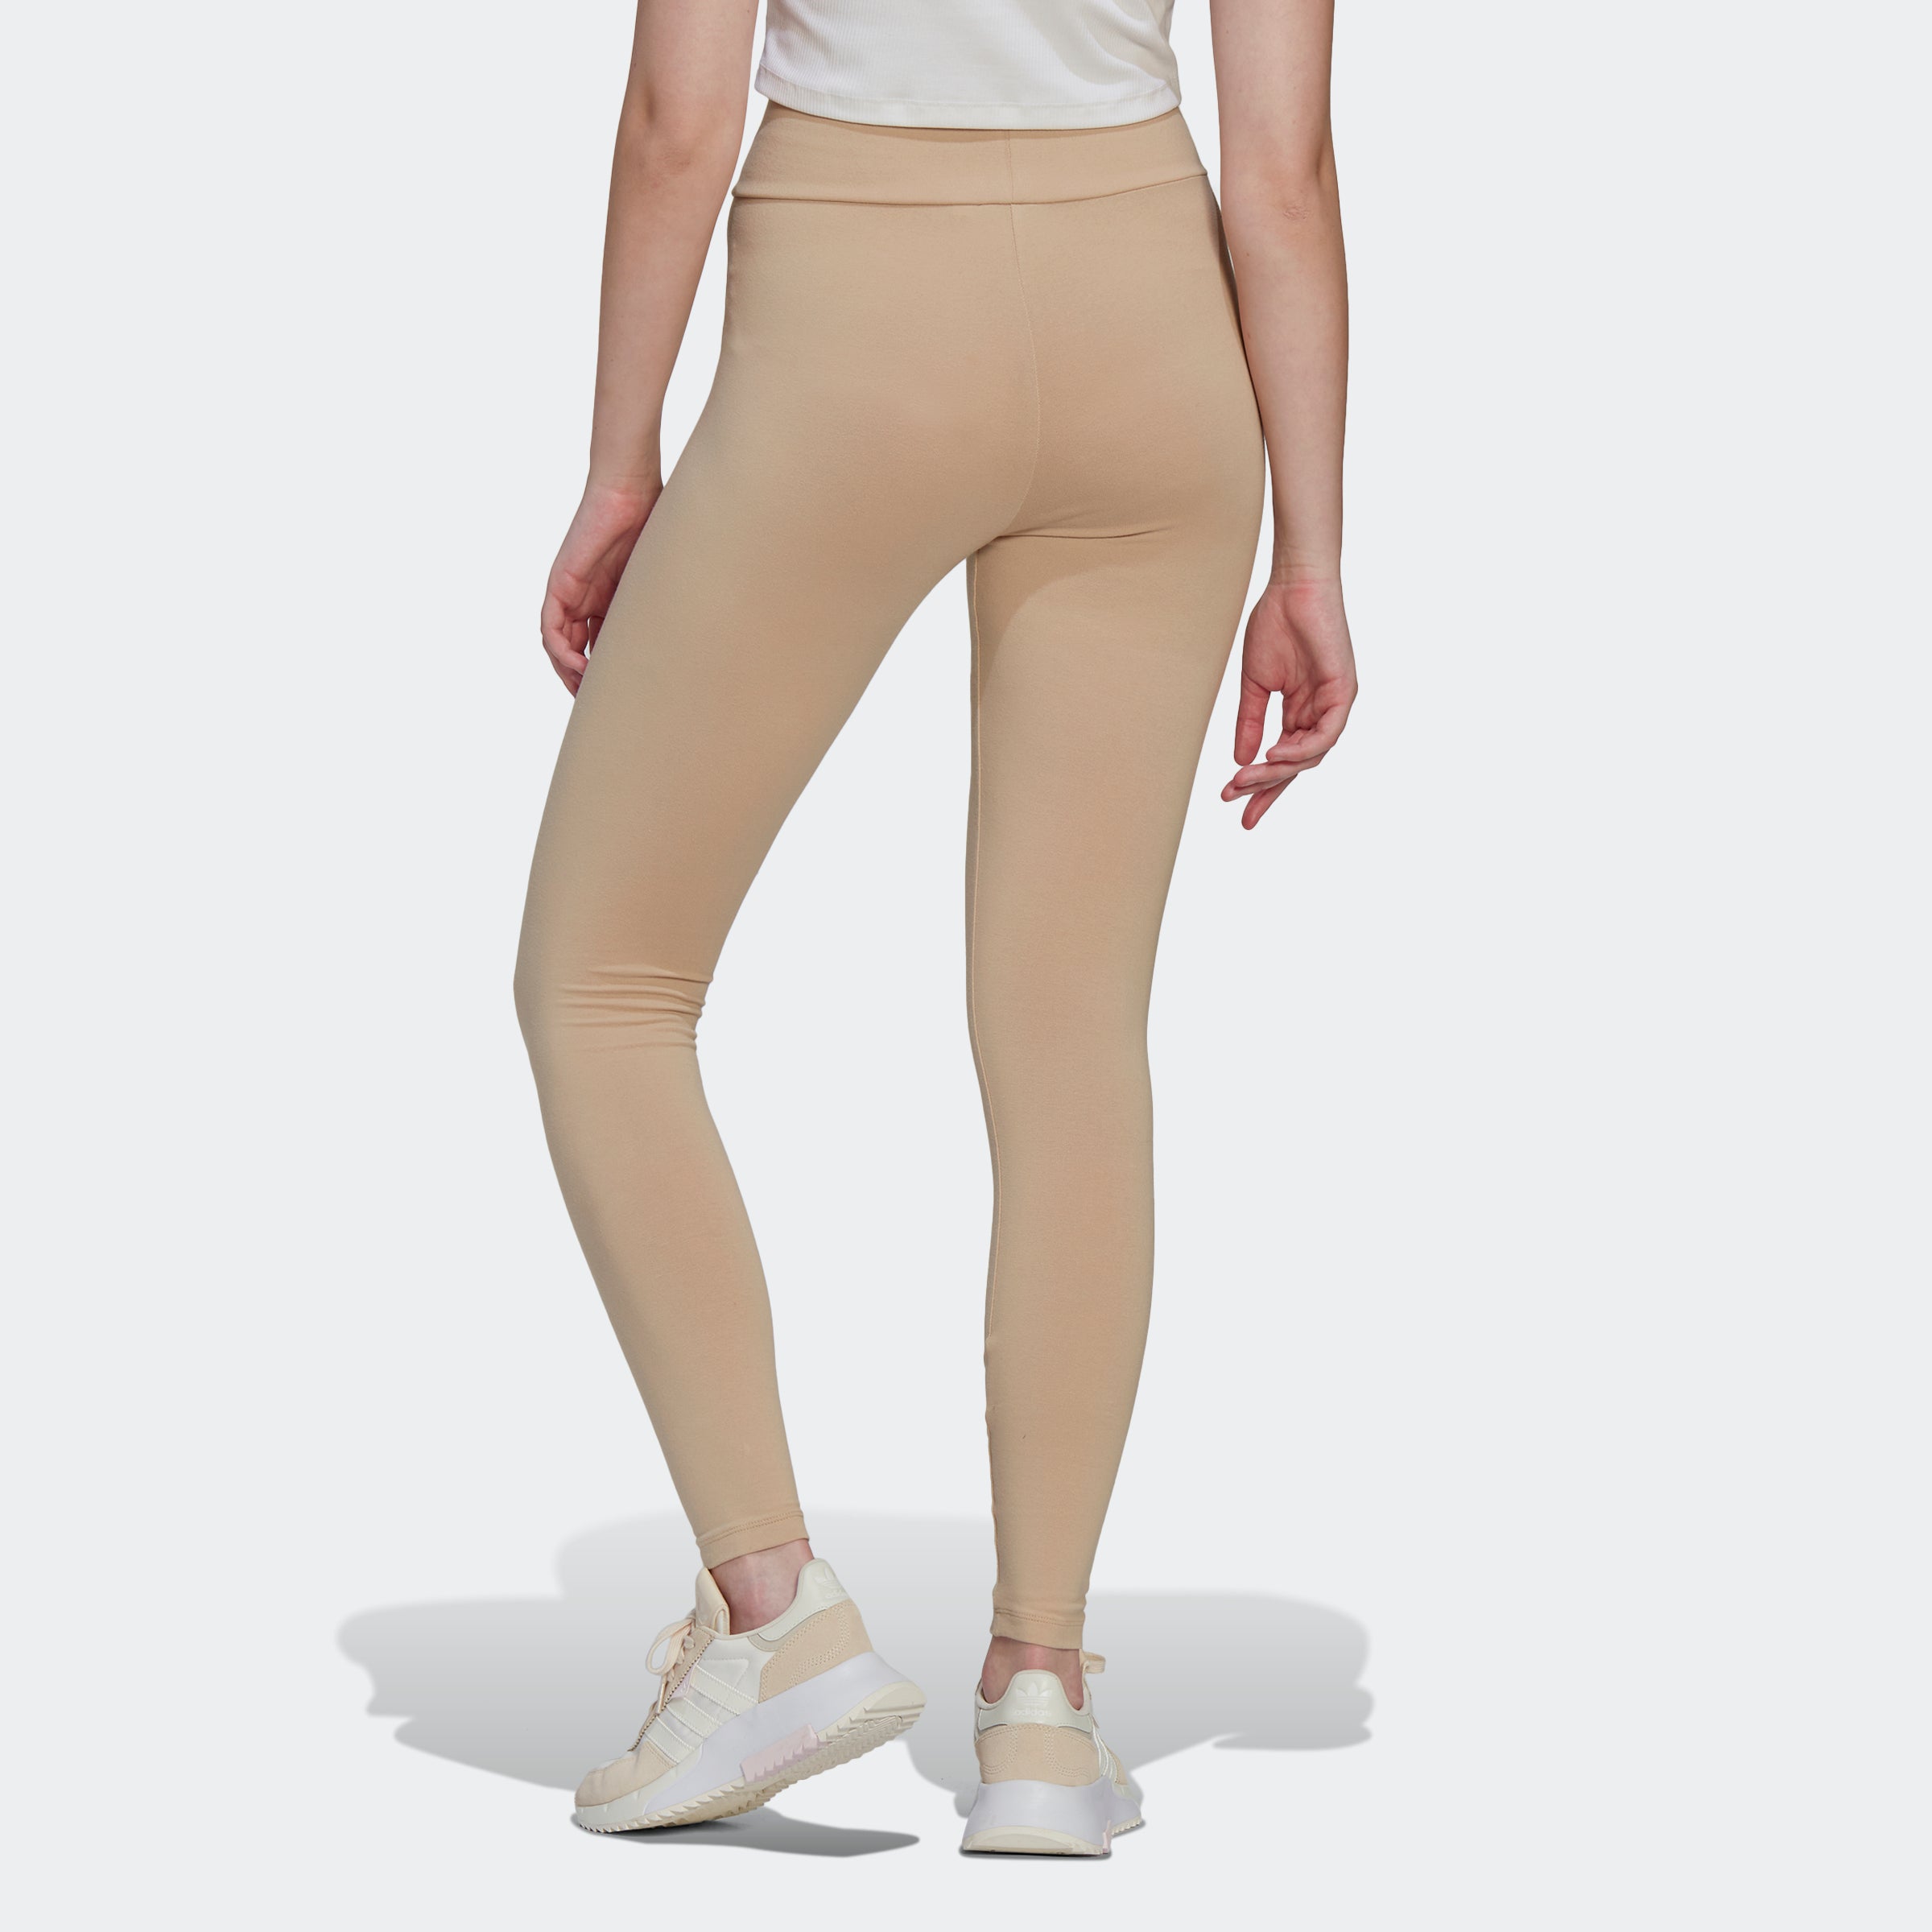 Cream Colored Women's Leggings With